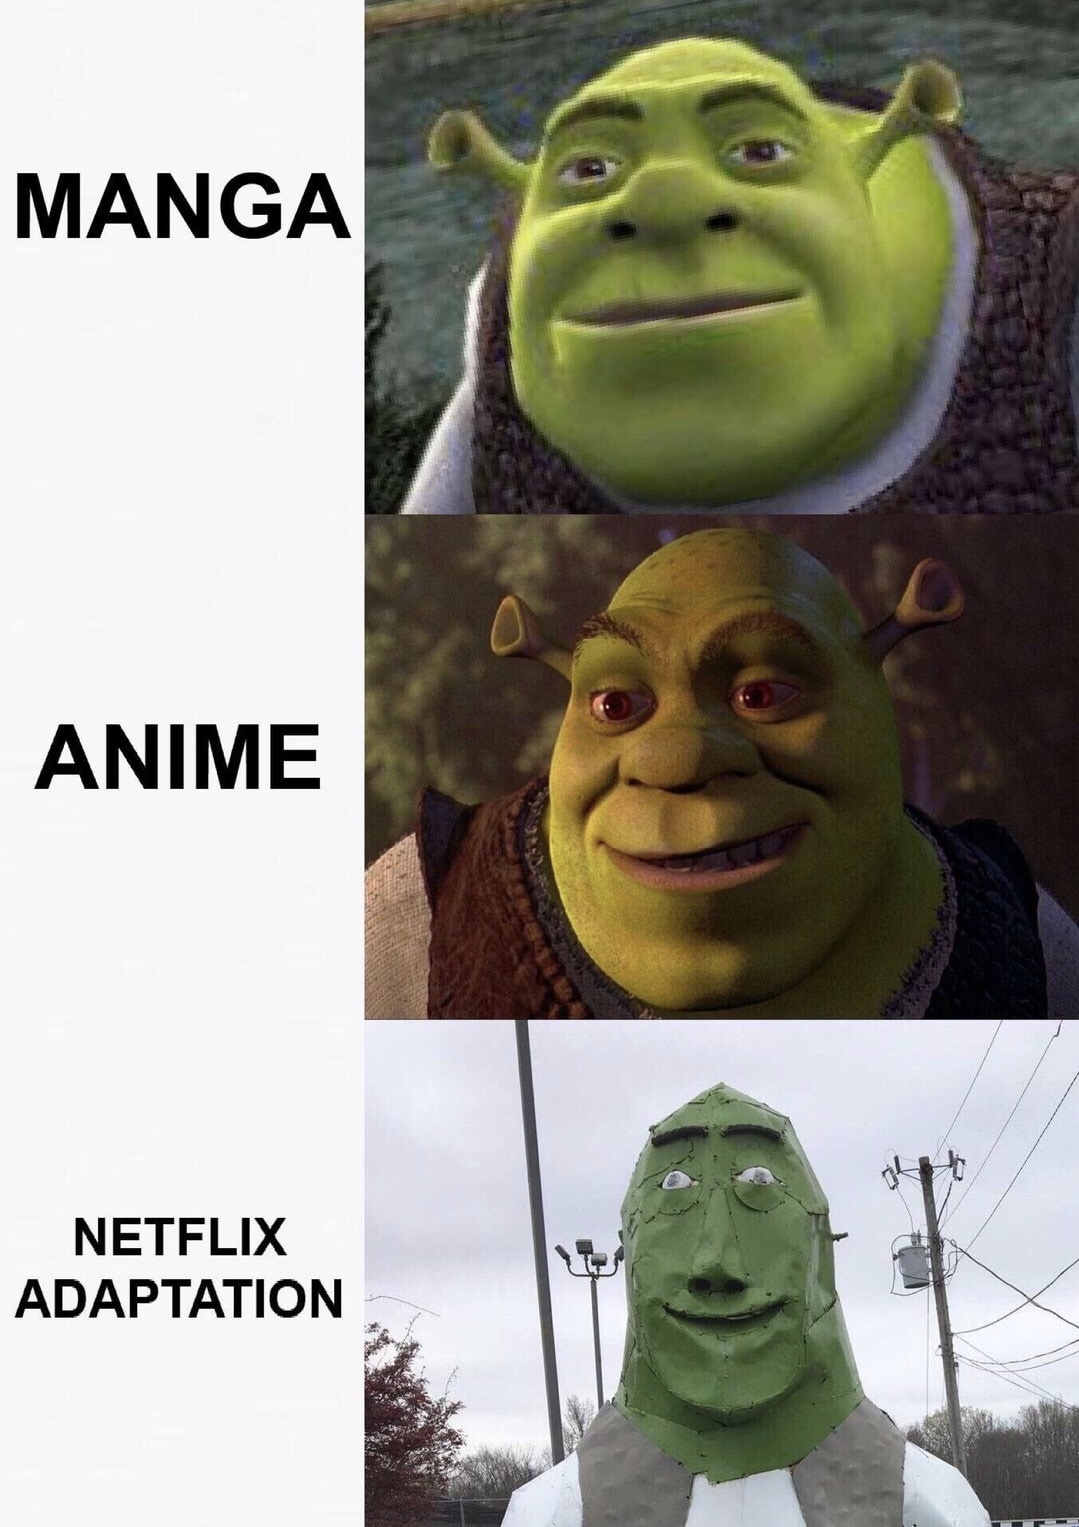 netflix adaptation meme shrek - Manga Anime Netflix Adaptation